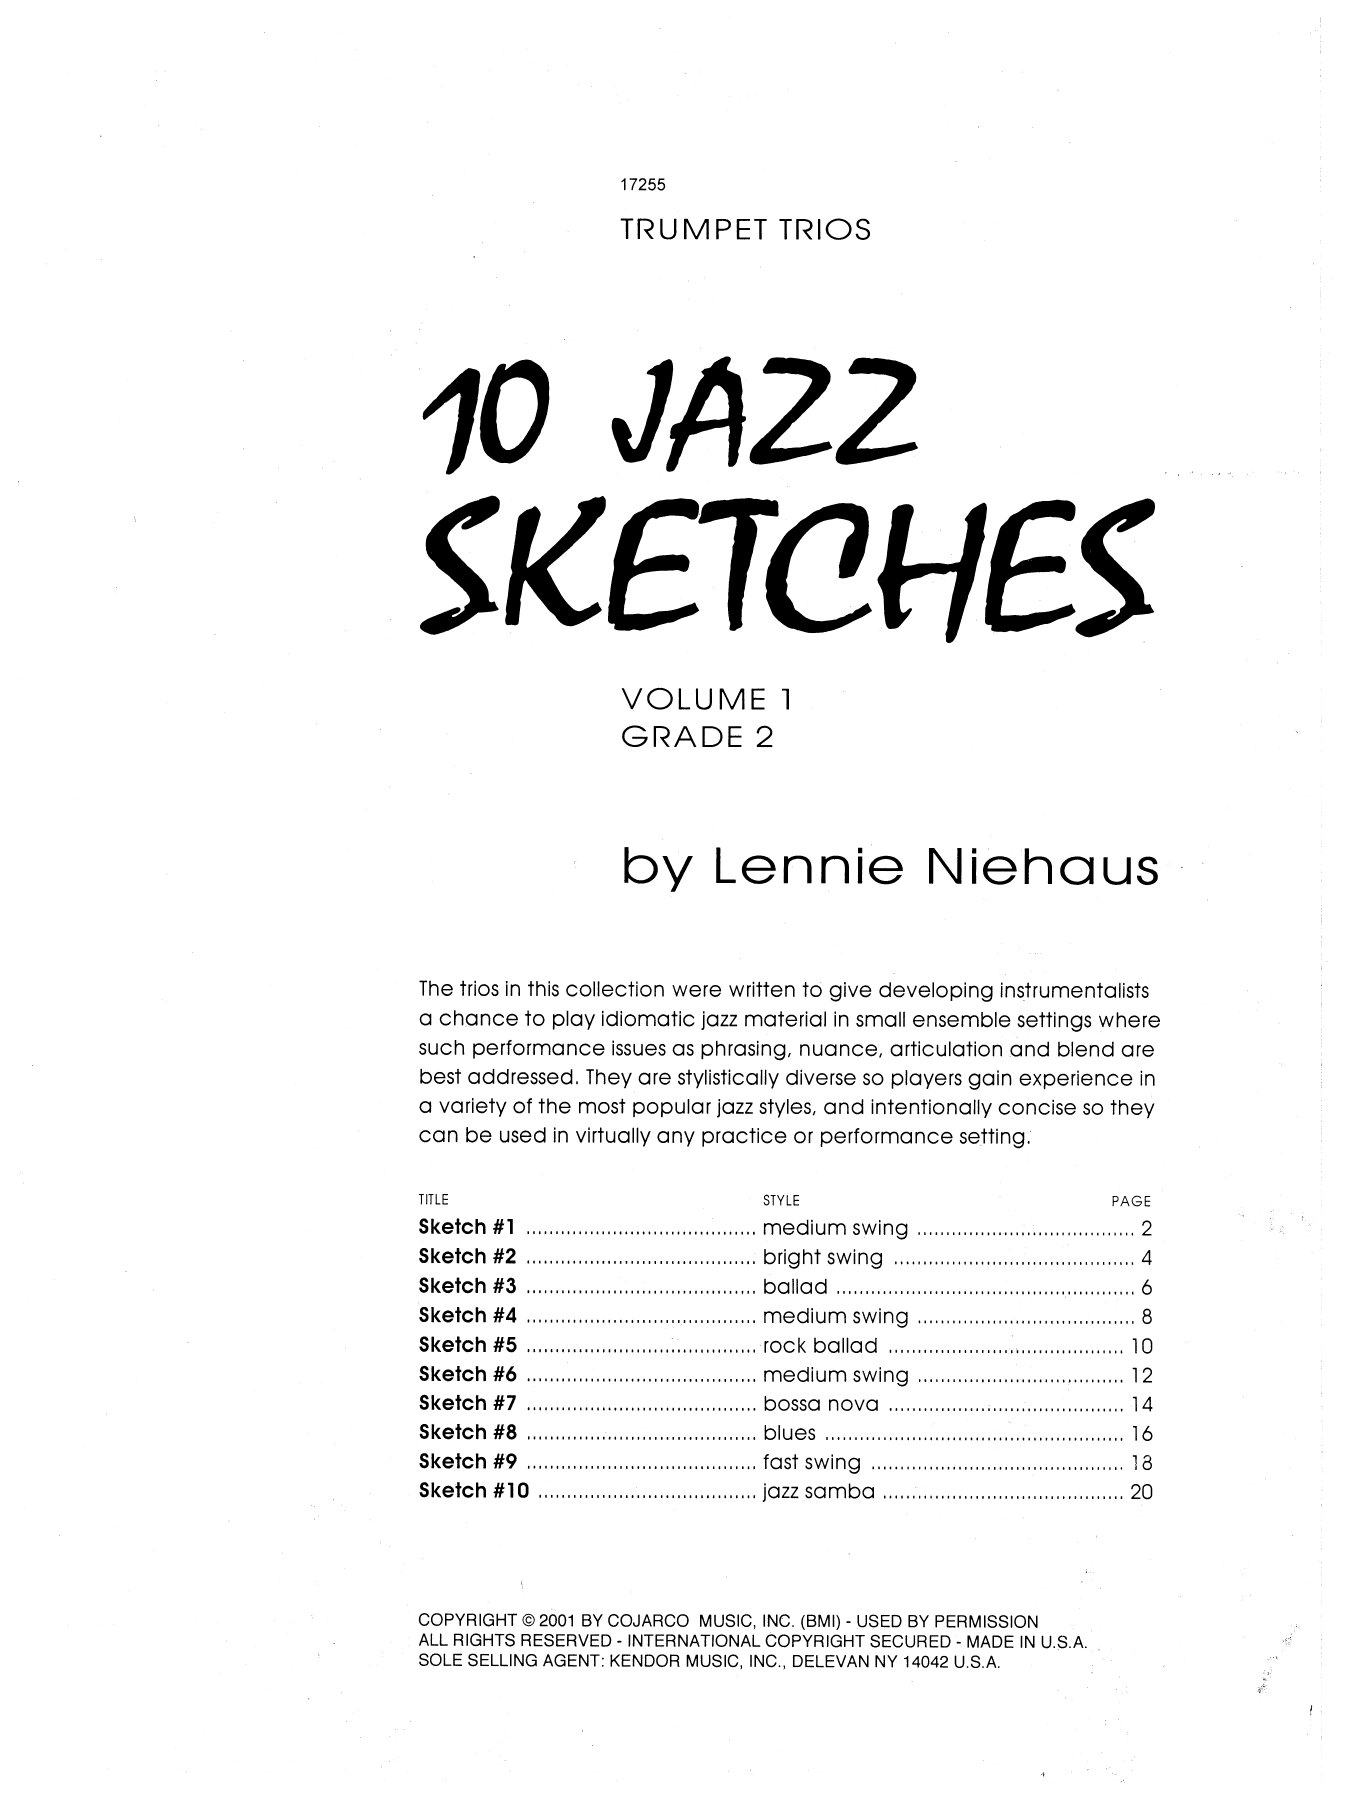 Lennie Niehaus 10 Jazz Sketches, Volume 1 sheet music notes and chords. Download Printable PDF.